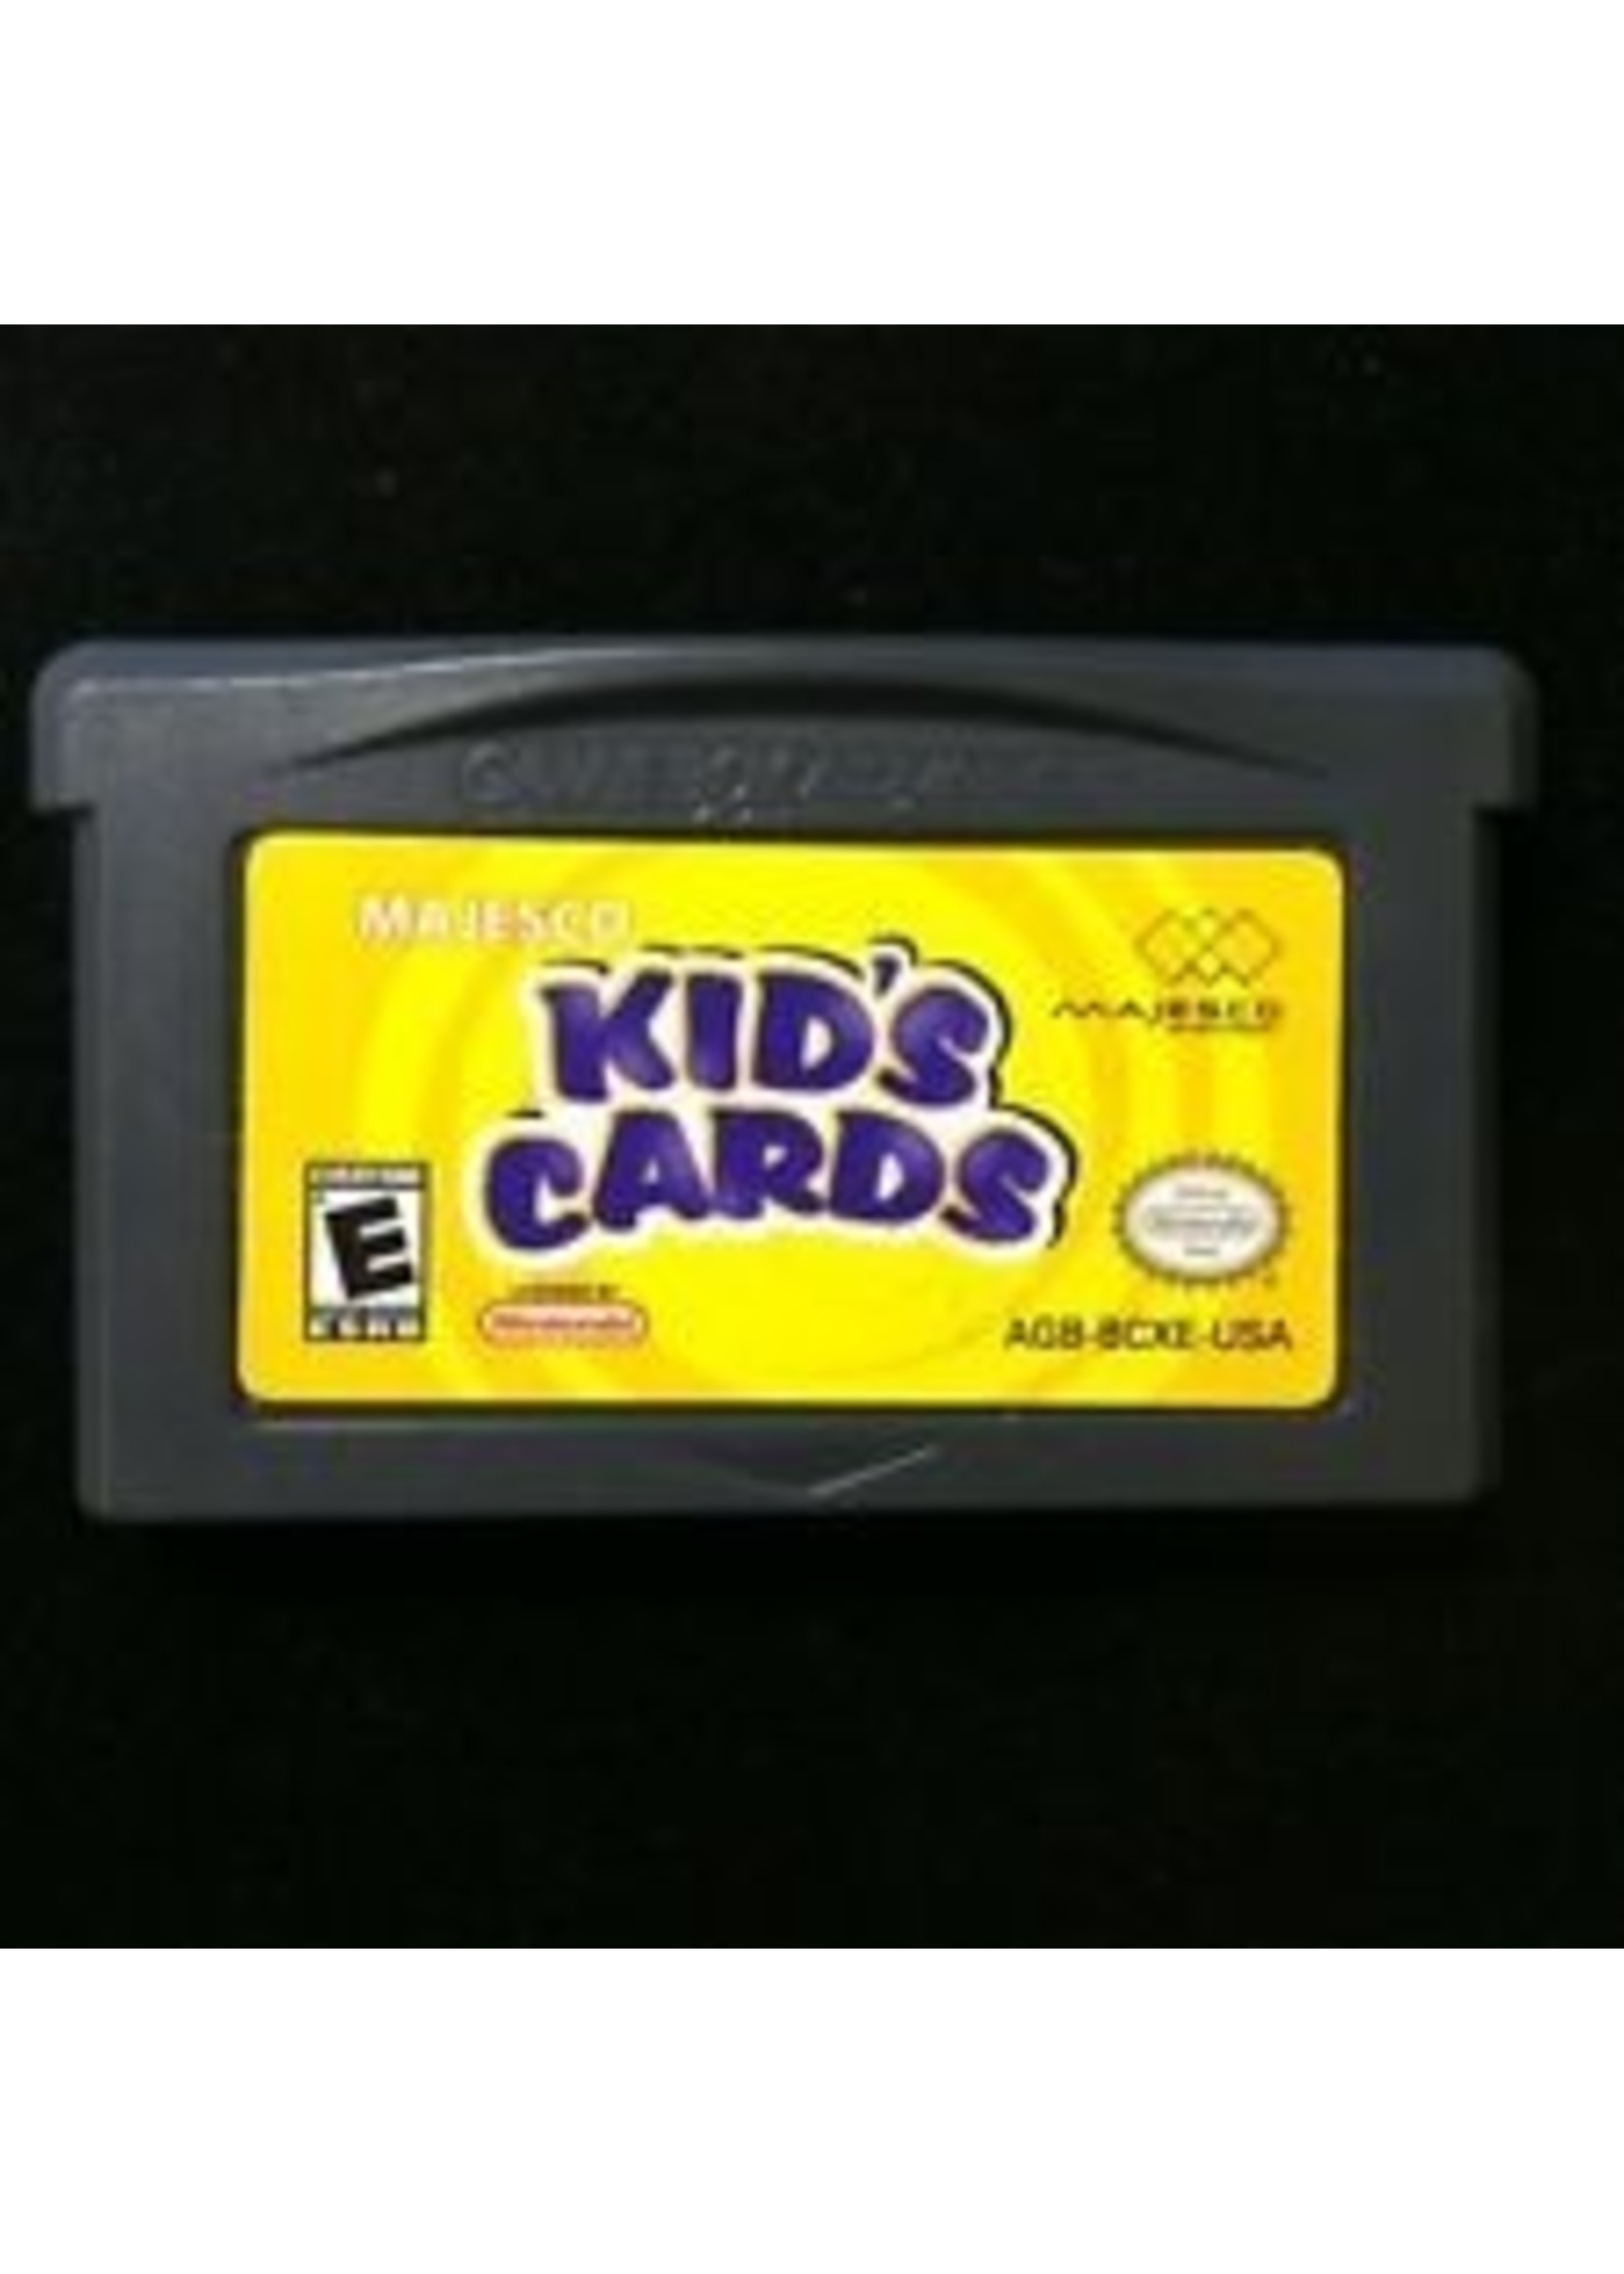 Nintendo Gameboy Advance Kid's Cards